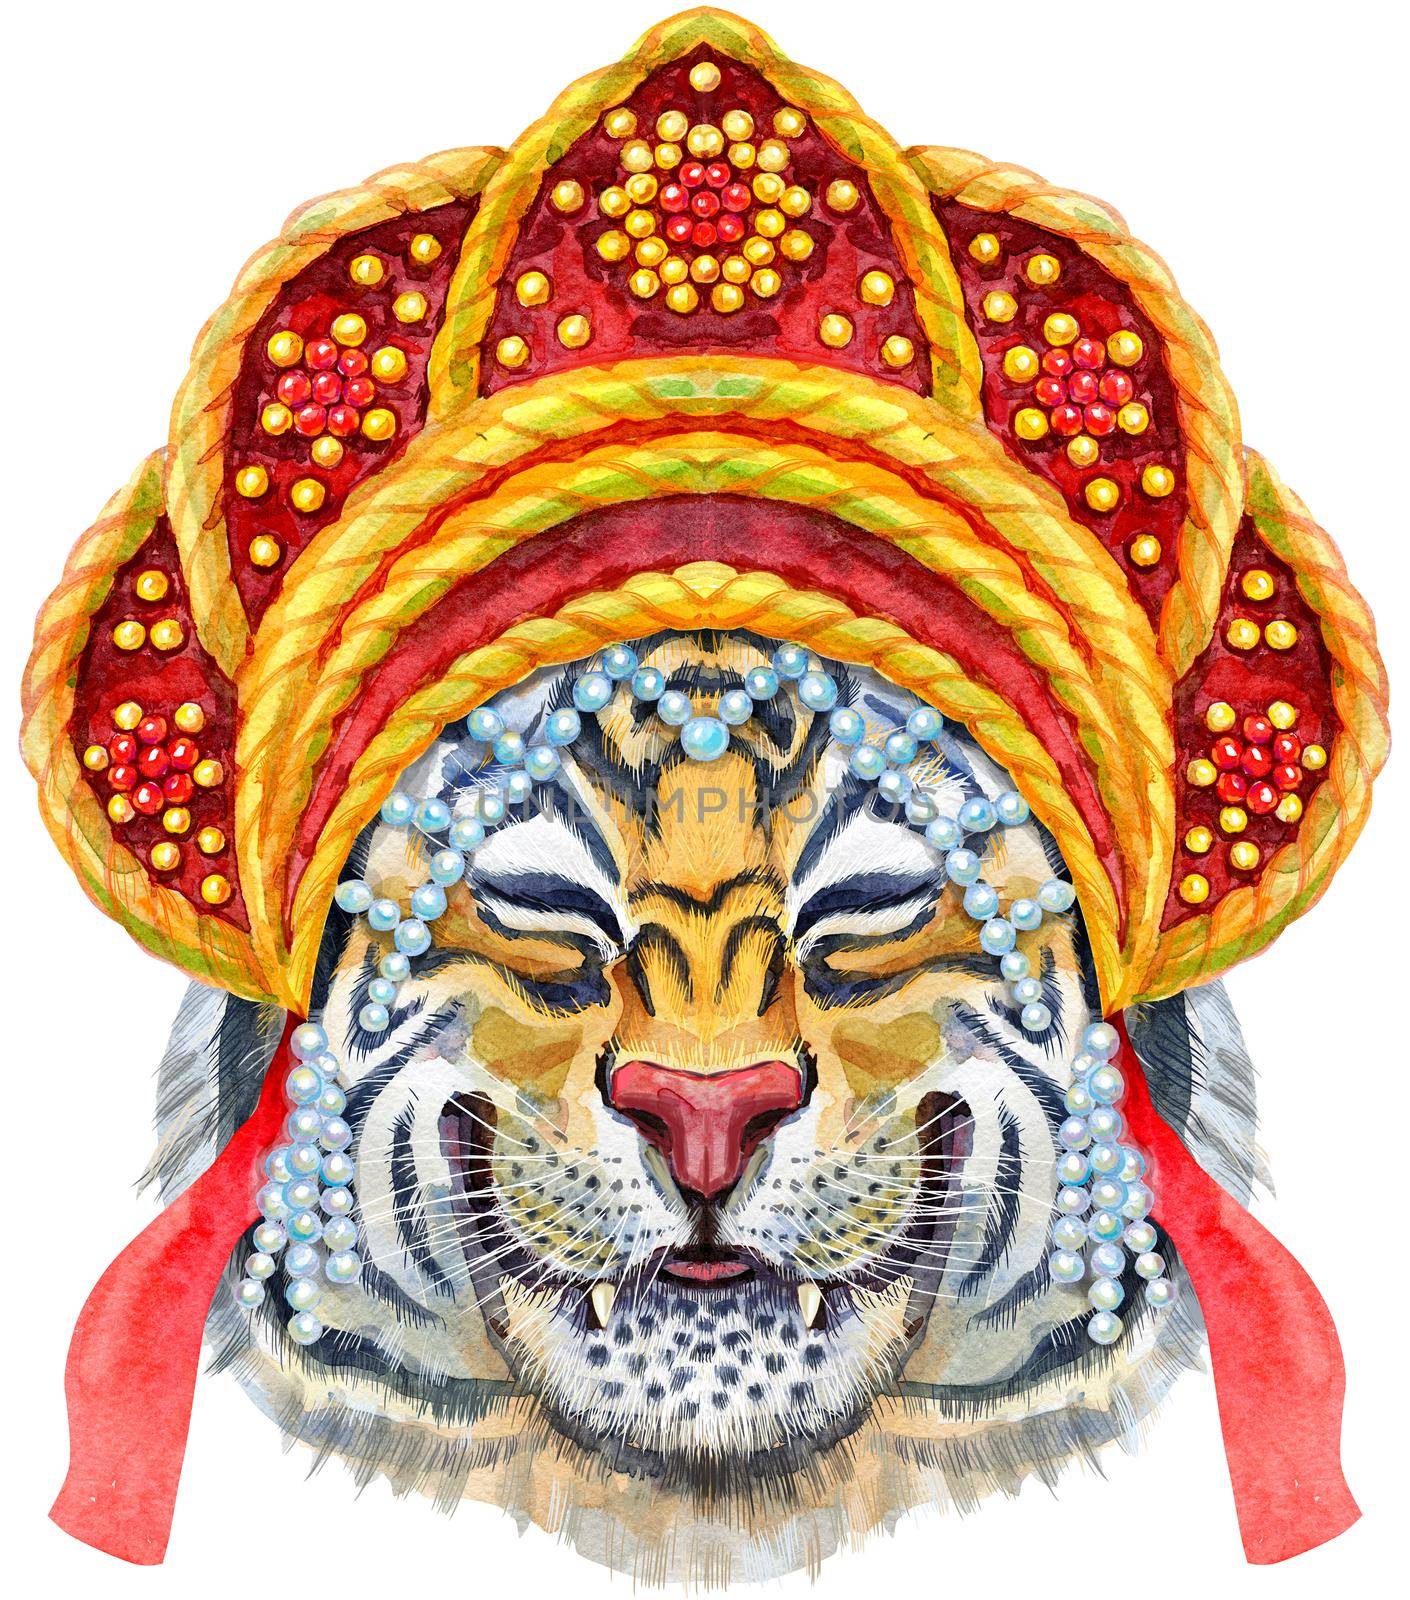 Watercolor illustration of orange smiling tiger in Russian national headdress kokoshnik. Wild animal watercolor illustration on white background